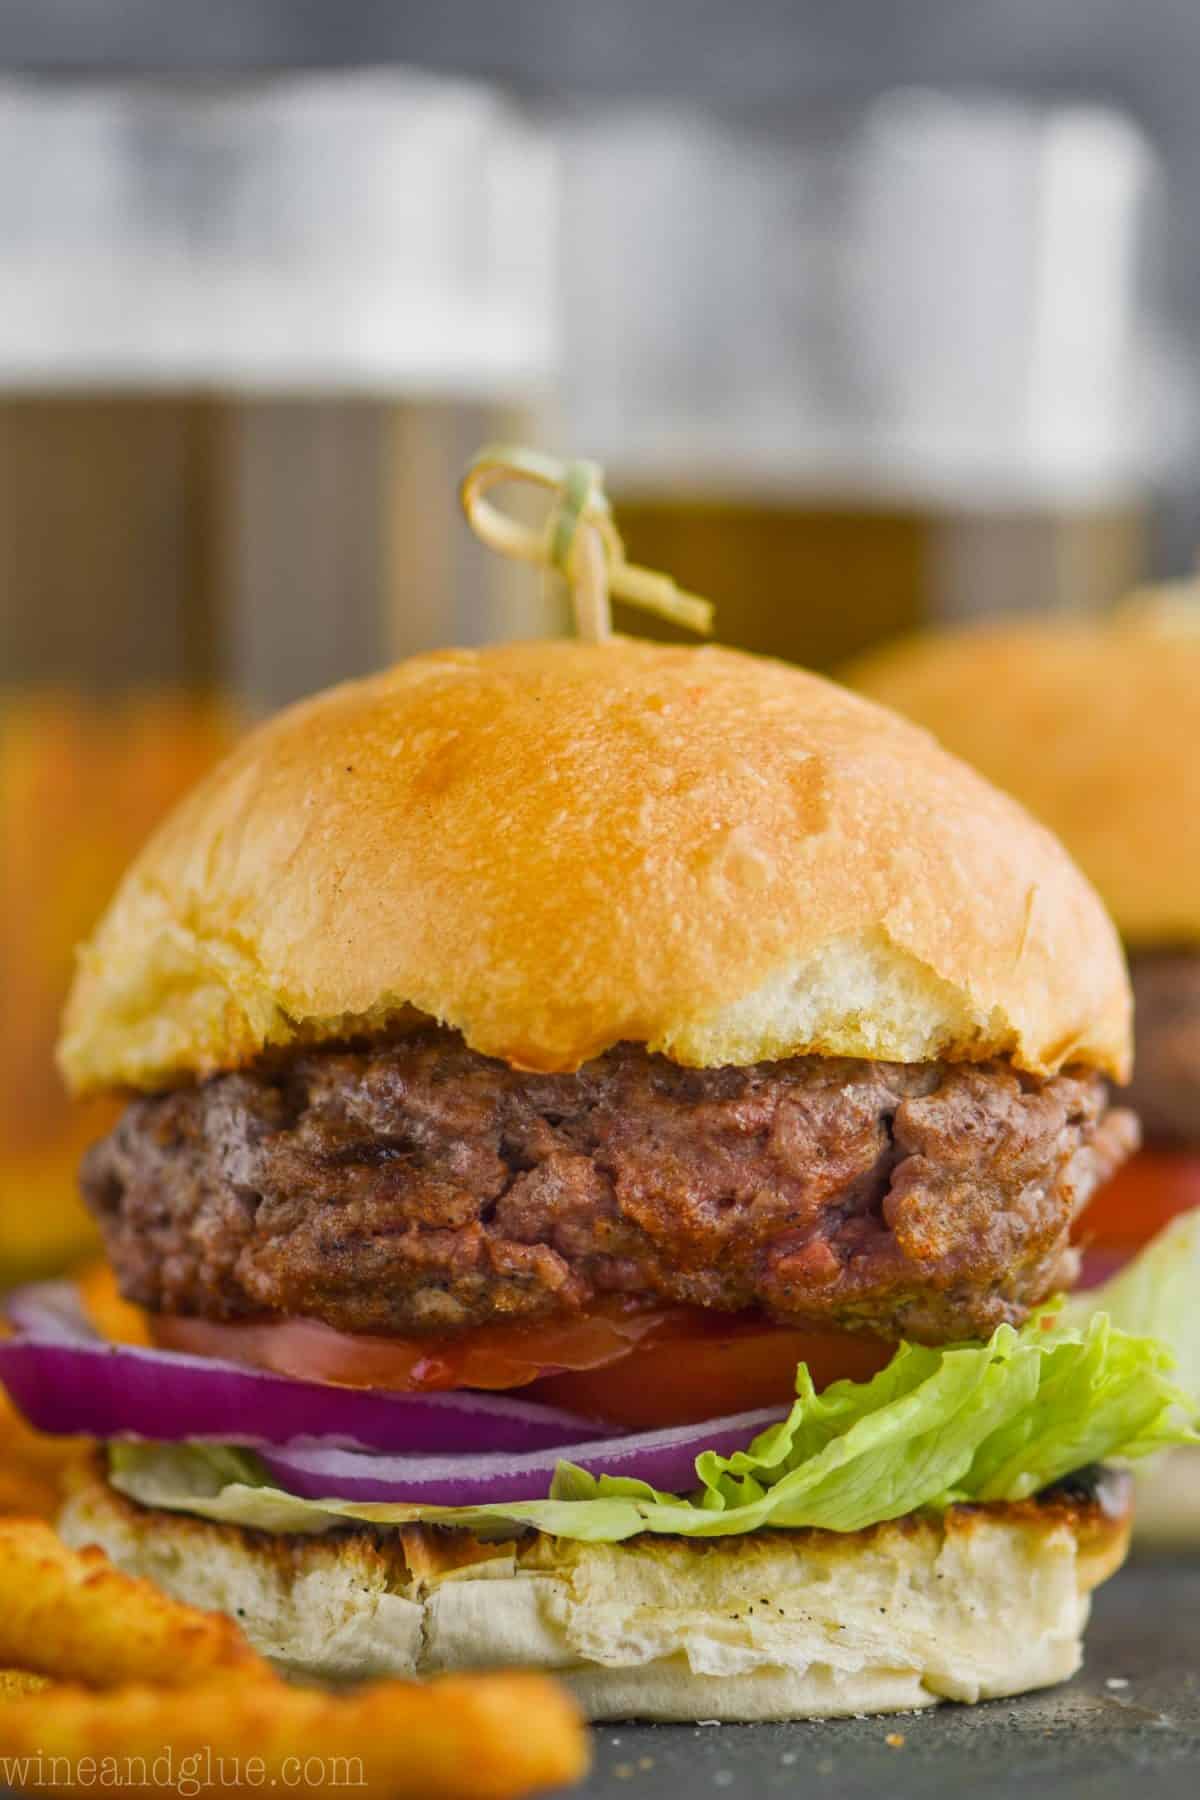 https://www.simplejoy.com/wp-content/uploads/2019/07/the_best_hamburger_seasoning.jpg